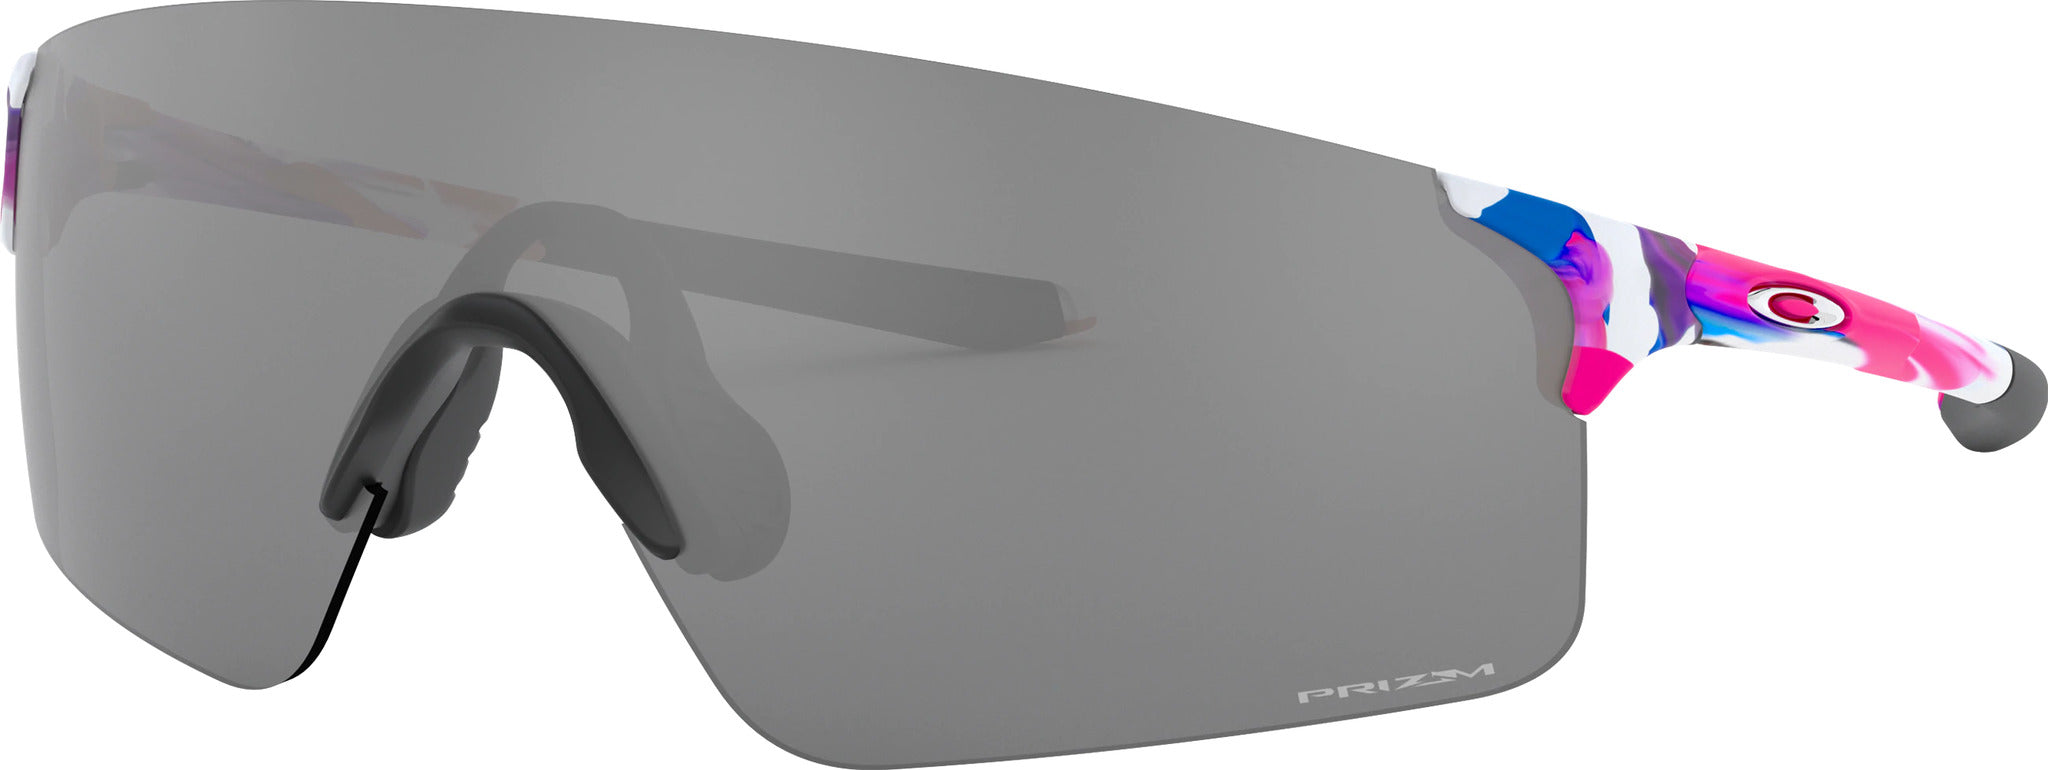 Oakley EVZero Blades - Kokoro - Prizm Black Iridium Lens Sunglasses